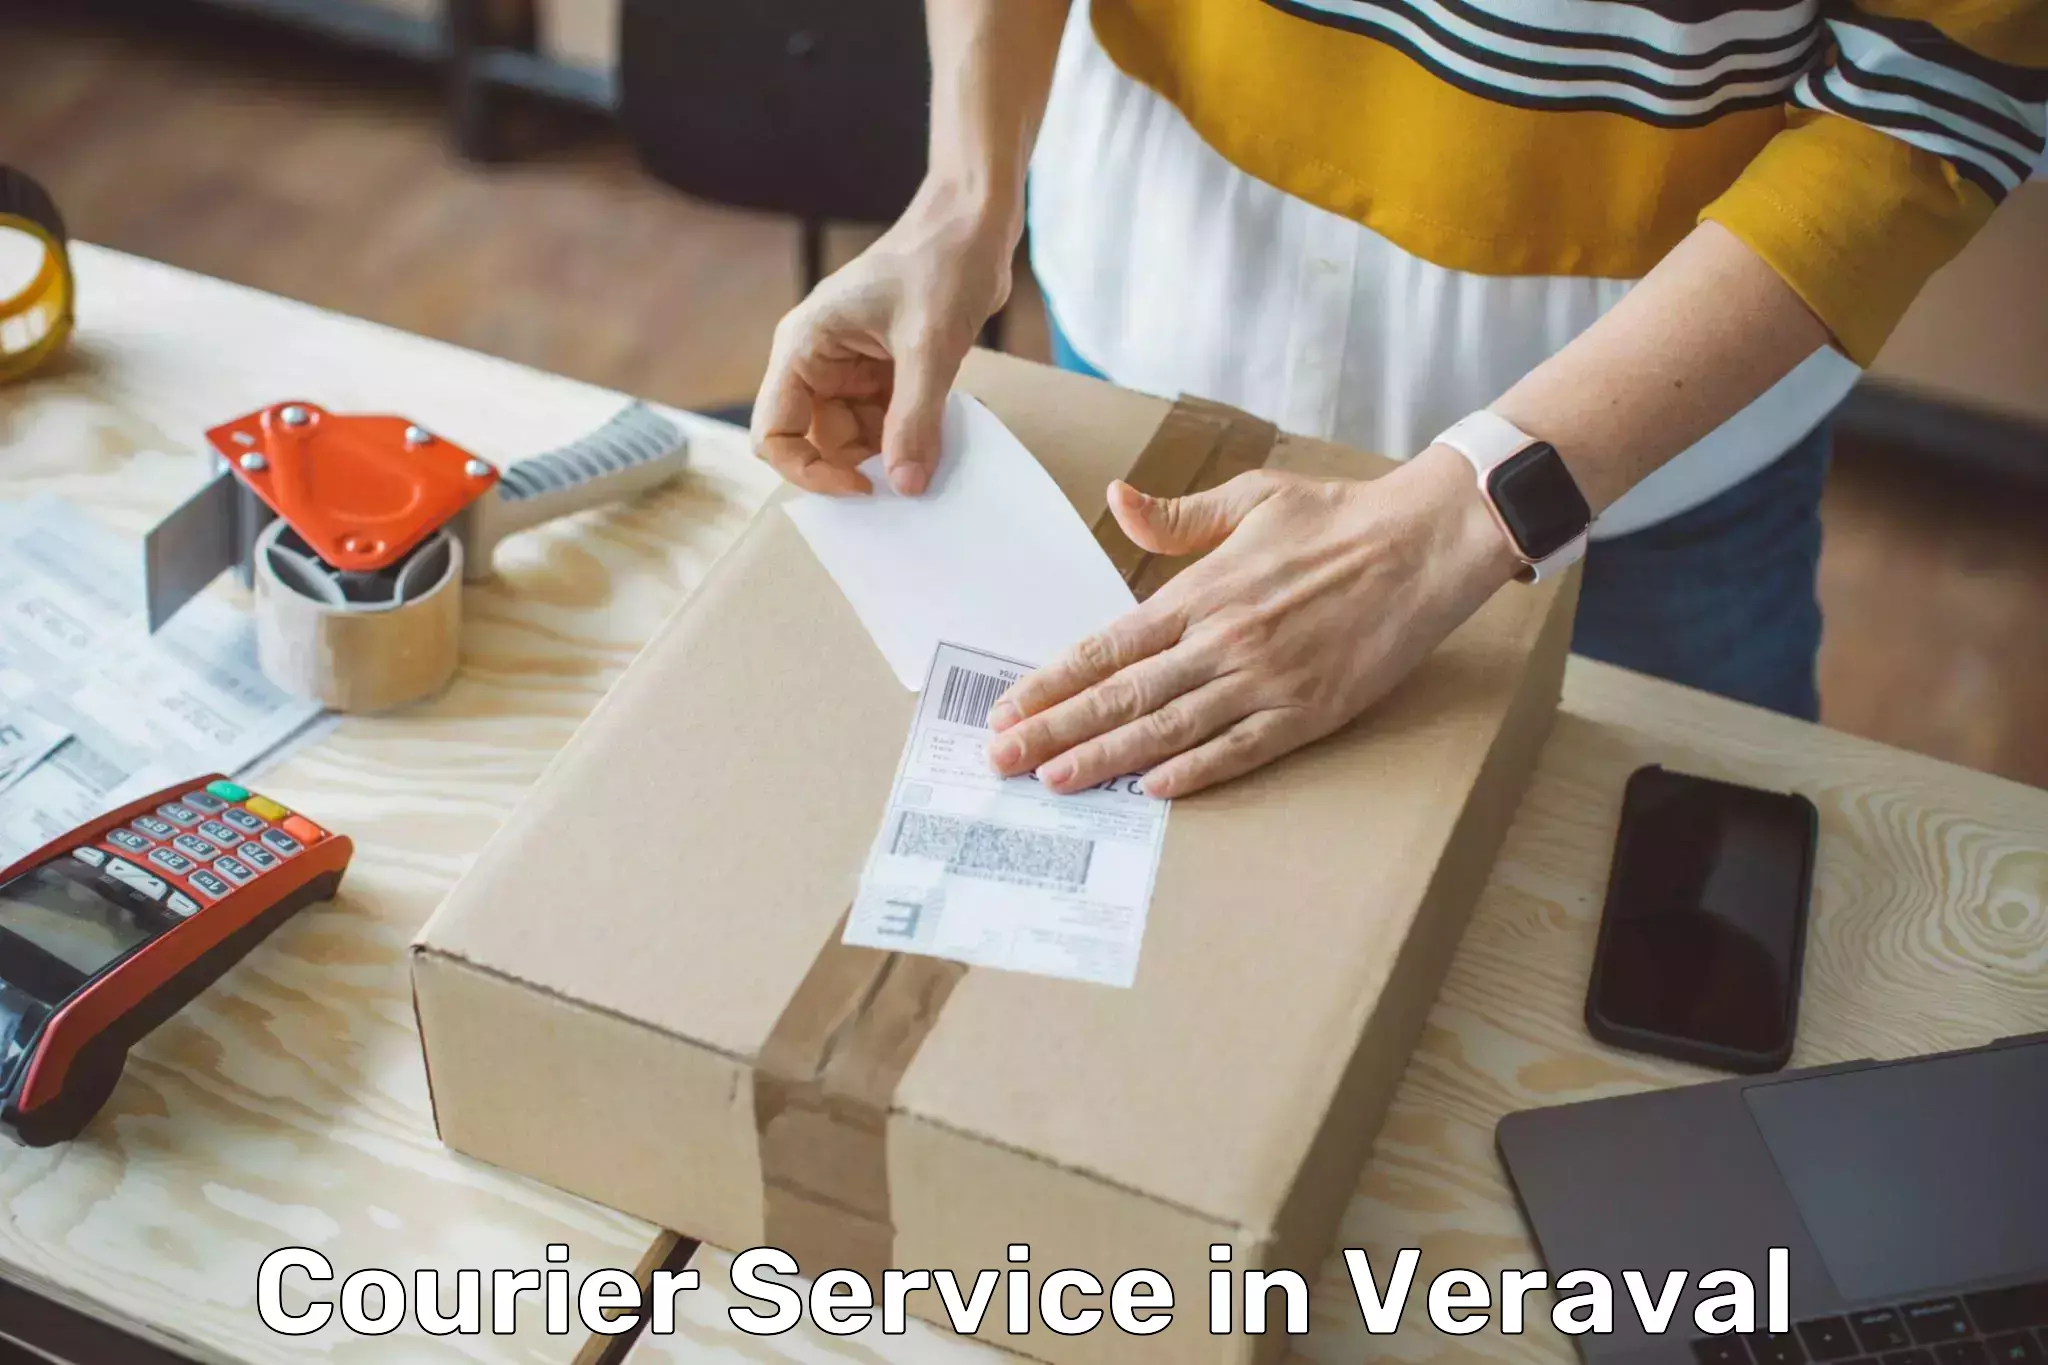 Diverse delivery methods in Veraval